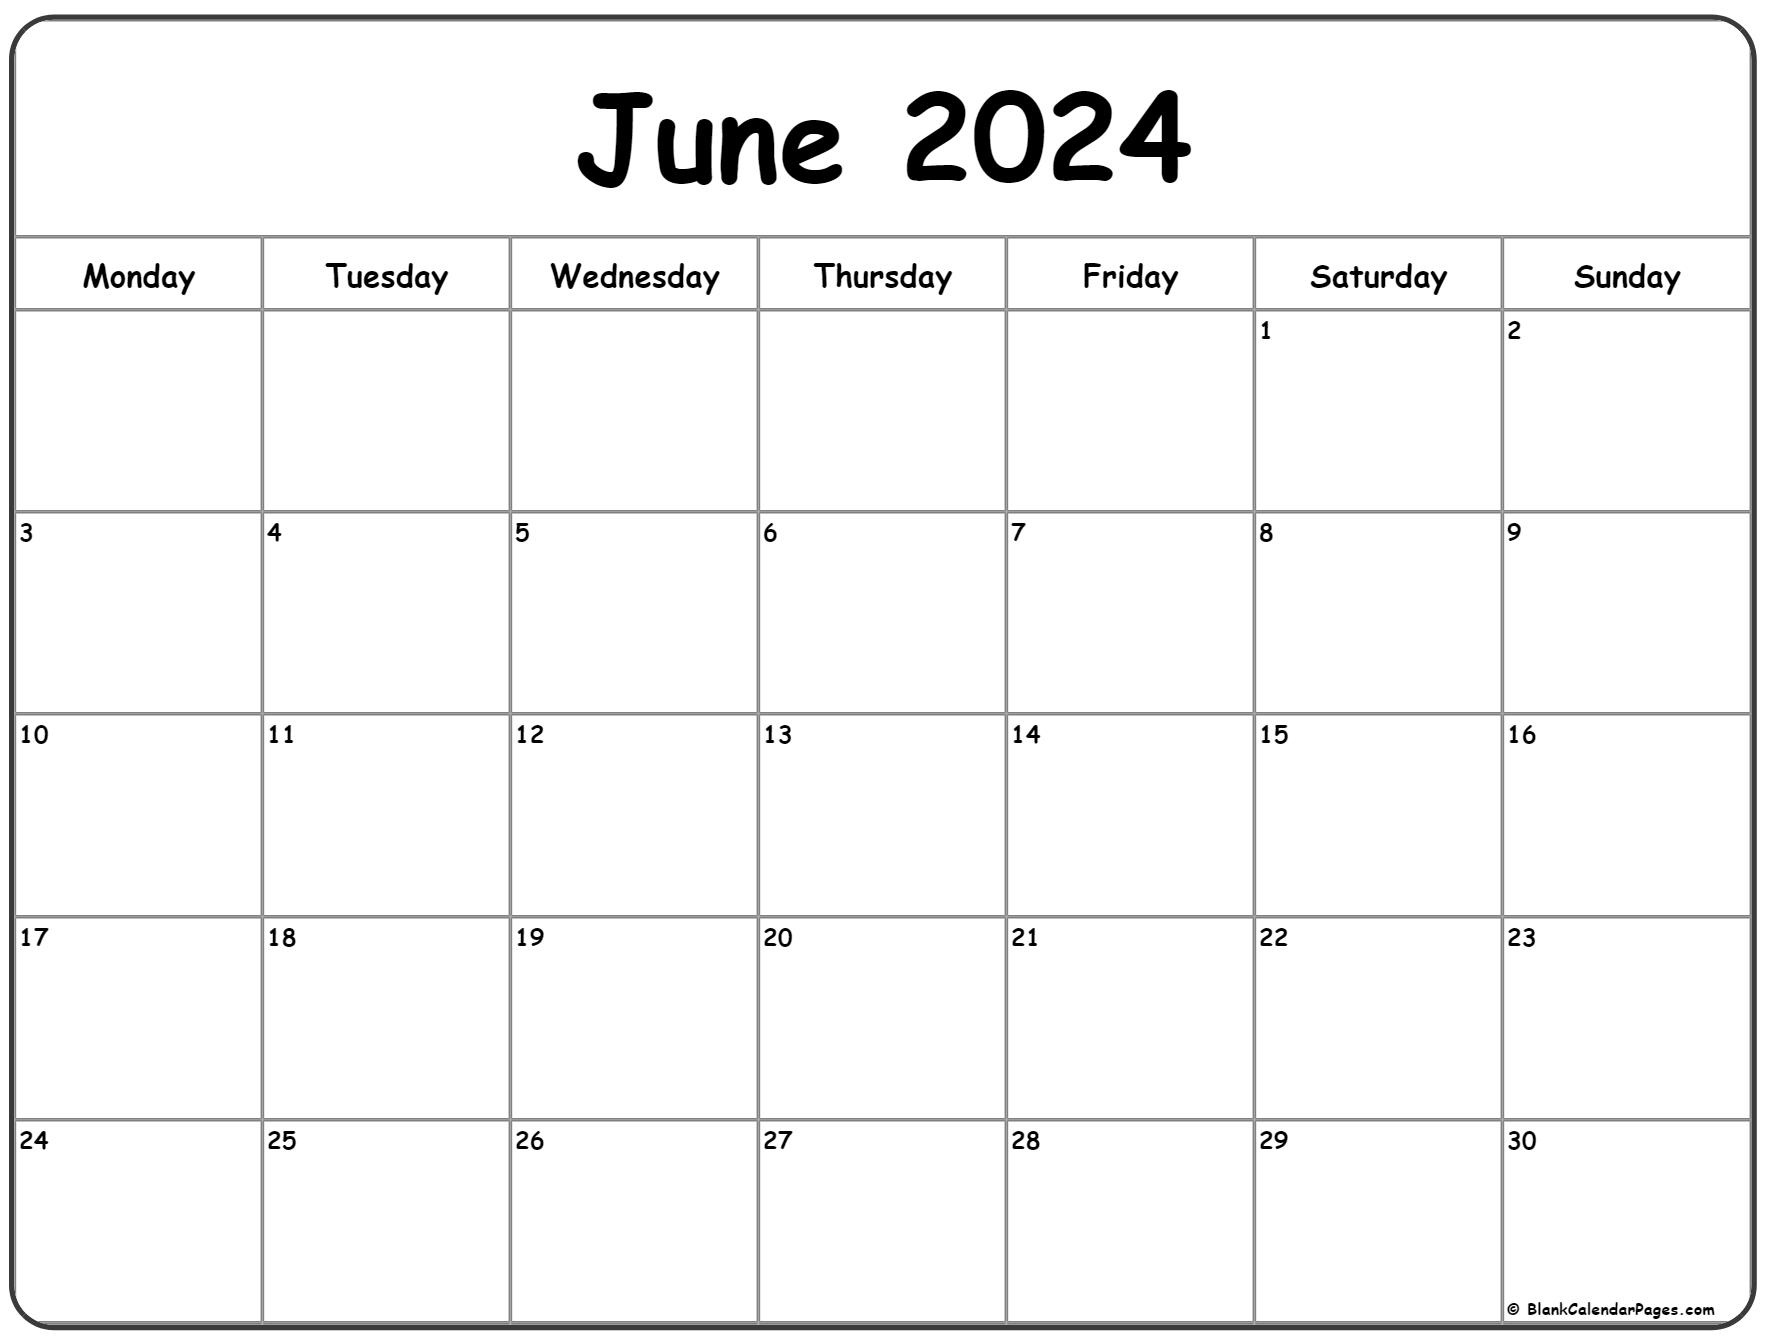 June 2024 Monday Calendar | Monday To Sunday pertaining to Images Of June 2024 Calendar